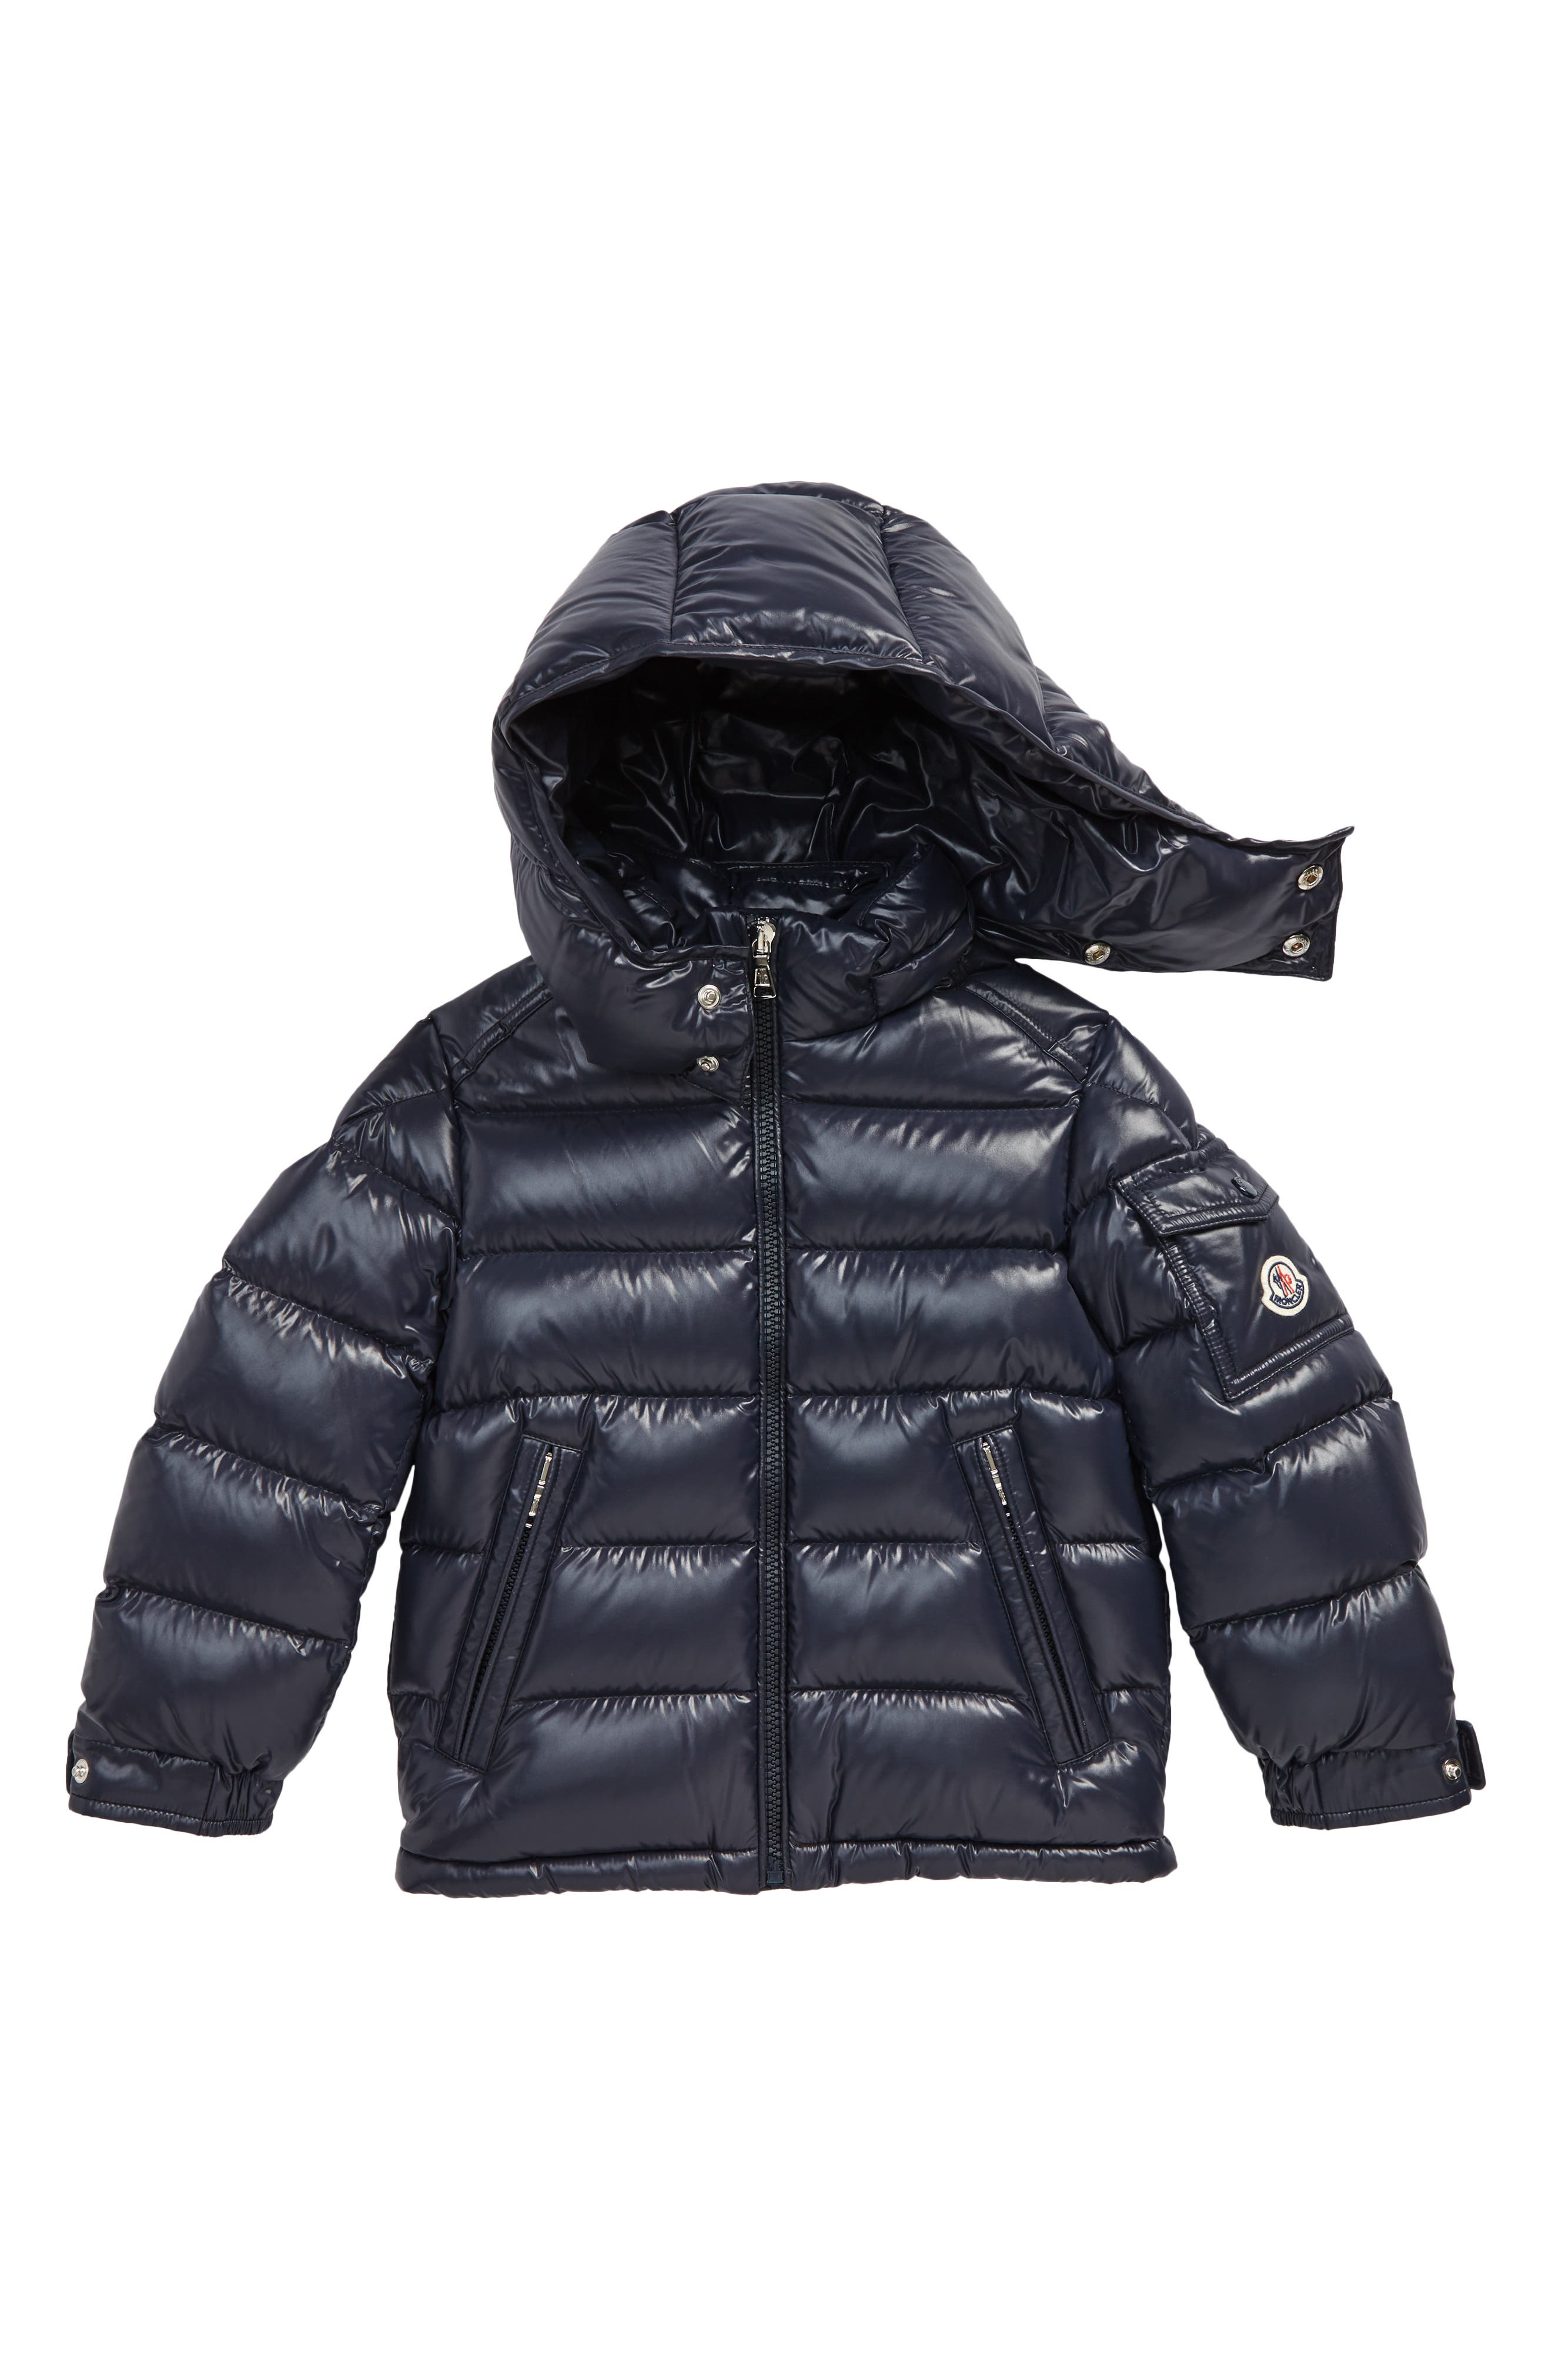 AIEOE Baby Boys Down Coats Lightweight Winter Puffer Hooded Jackets 1-5 Years